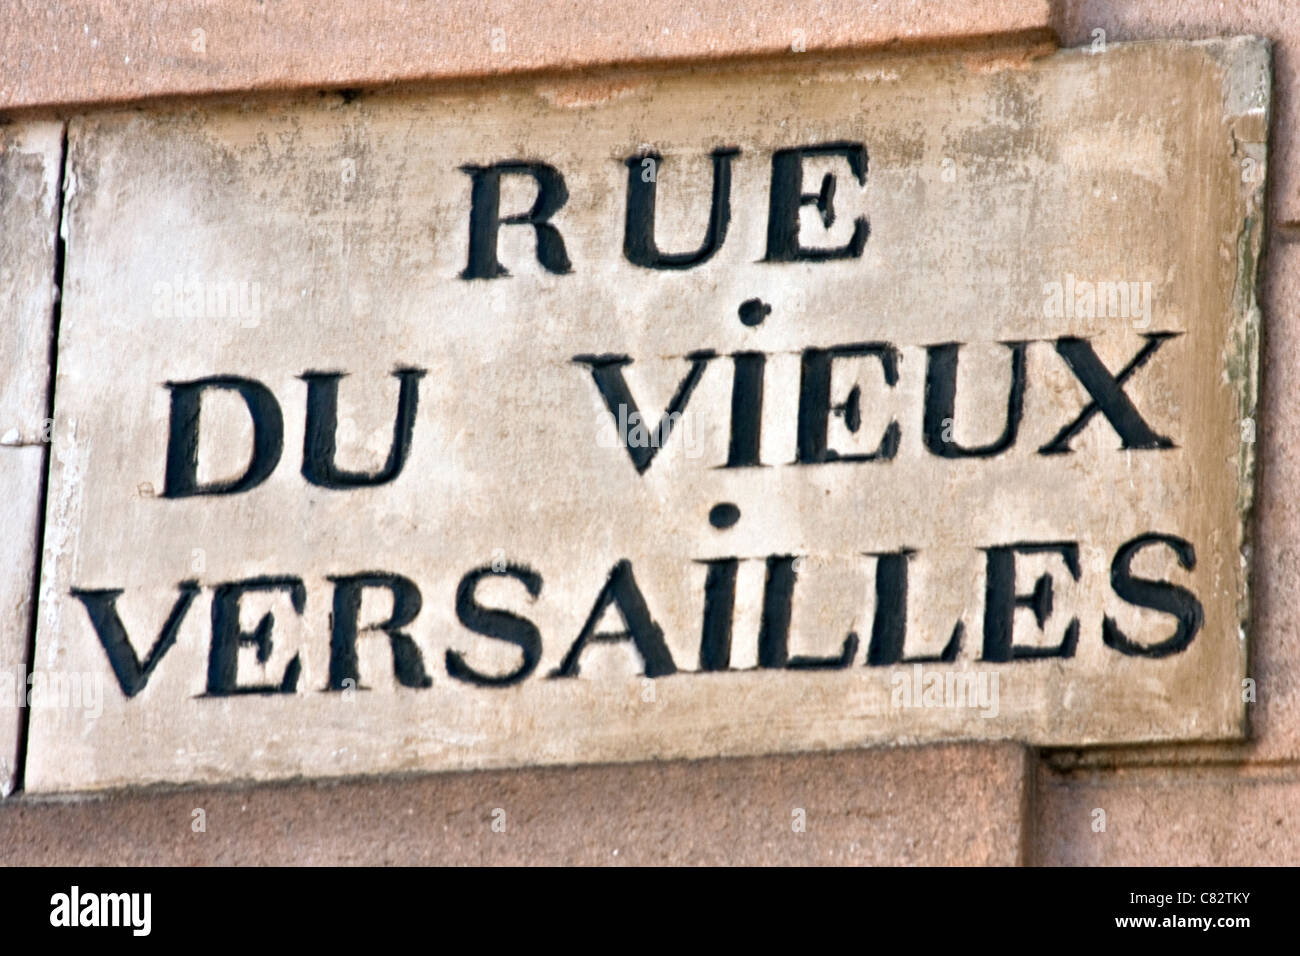 Road Signs - Rue du Vieux Versailles, France Stock Photo